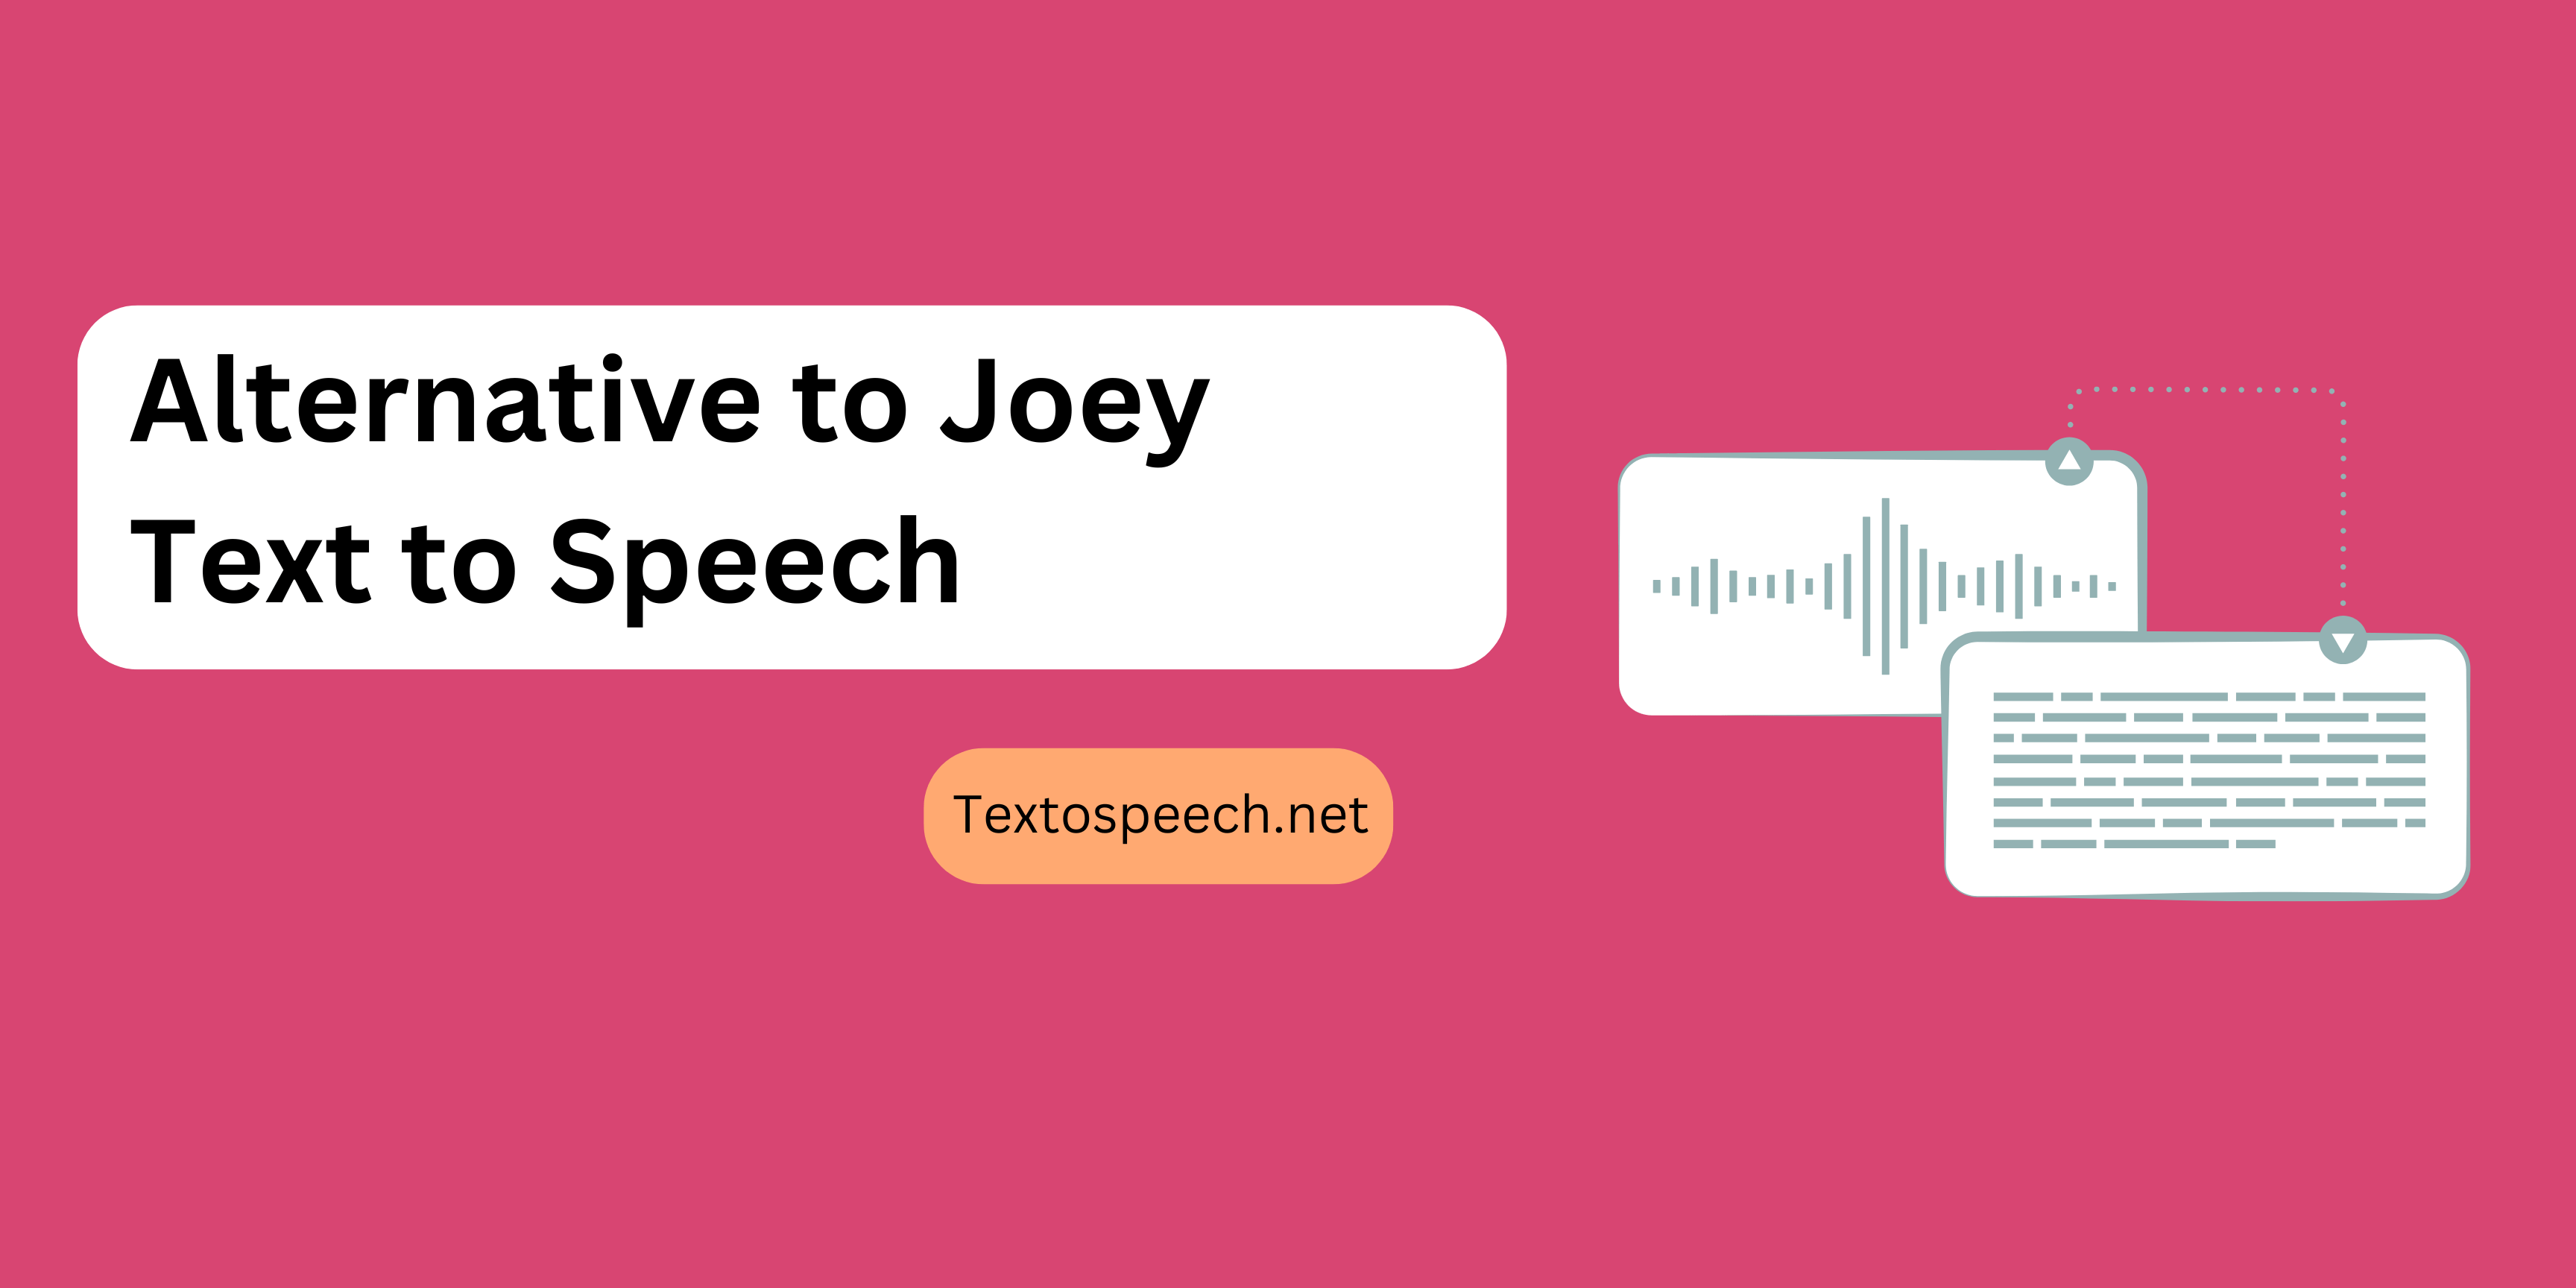 Alternative to Joey Text to Speech